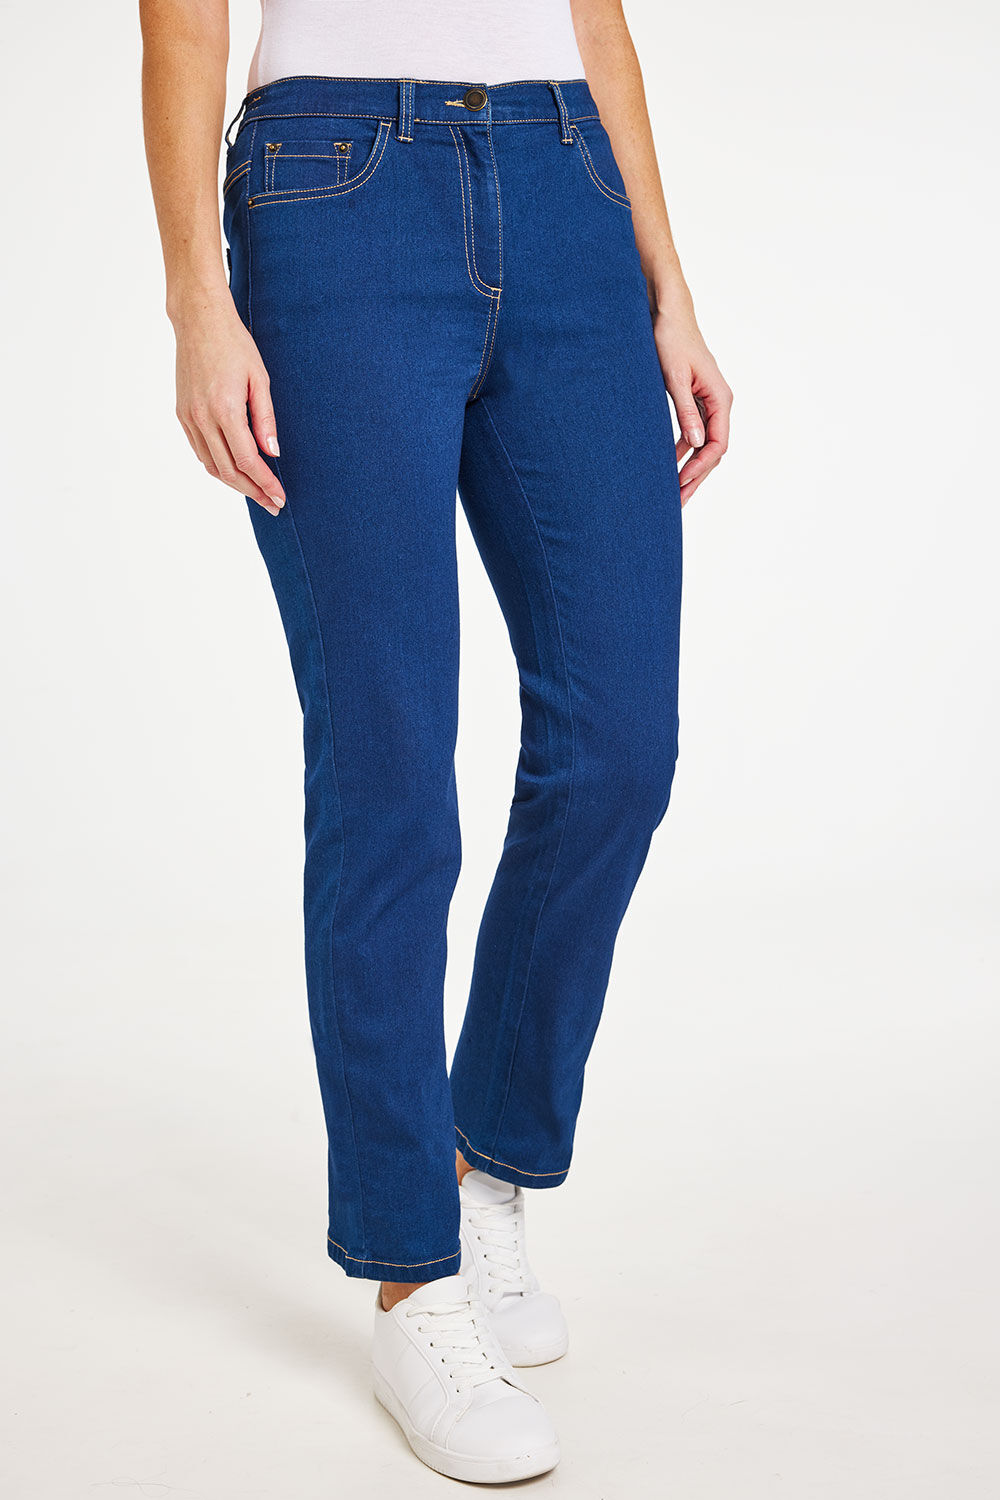 Bonmarche Ink/Denim The Sara Straight Leg Jeans, Size: 10